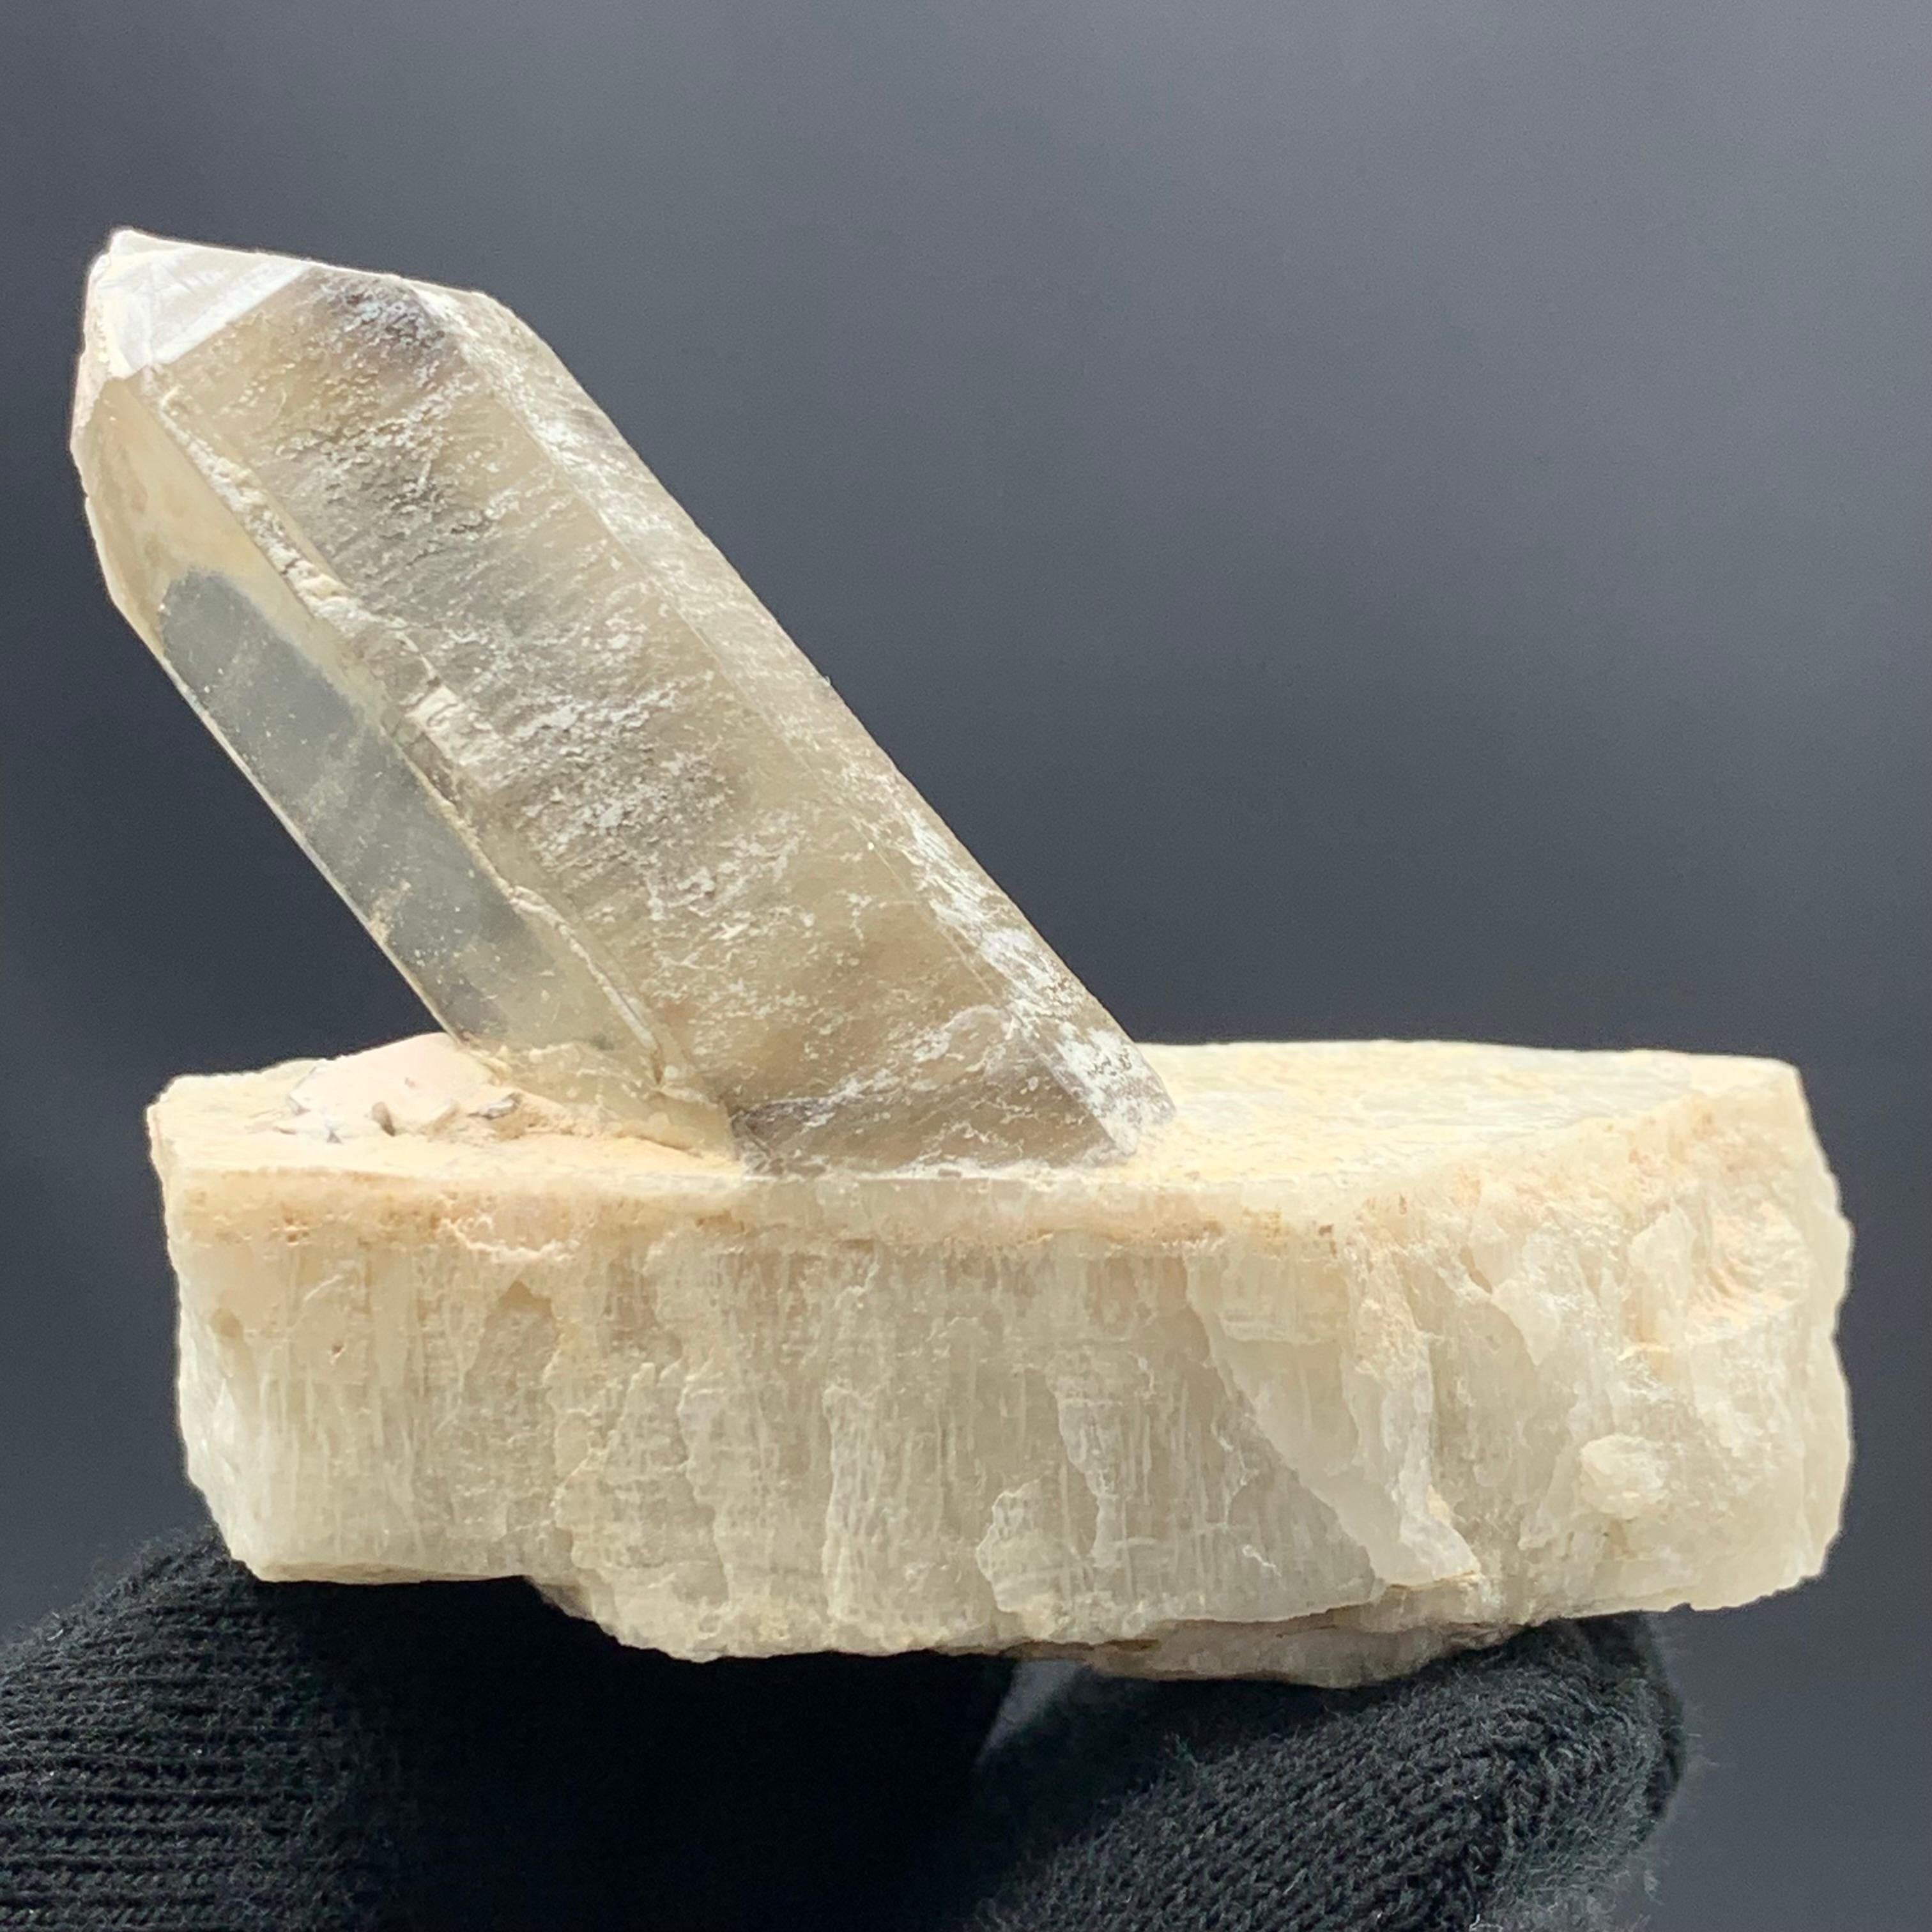 90.00 Gram Gorgeous Feldspar With Quartz From Skardu District, Pakistan 

Weight: 90.00 Gram 
Dimension: 5.3 x 6.2 x 2.6 Cm 
Origin: Skardu, Pakistan 

Quartz is one of the most common minerals in the Earth's crust. As a mineral name, quartz refers